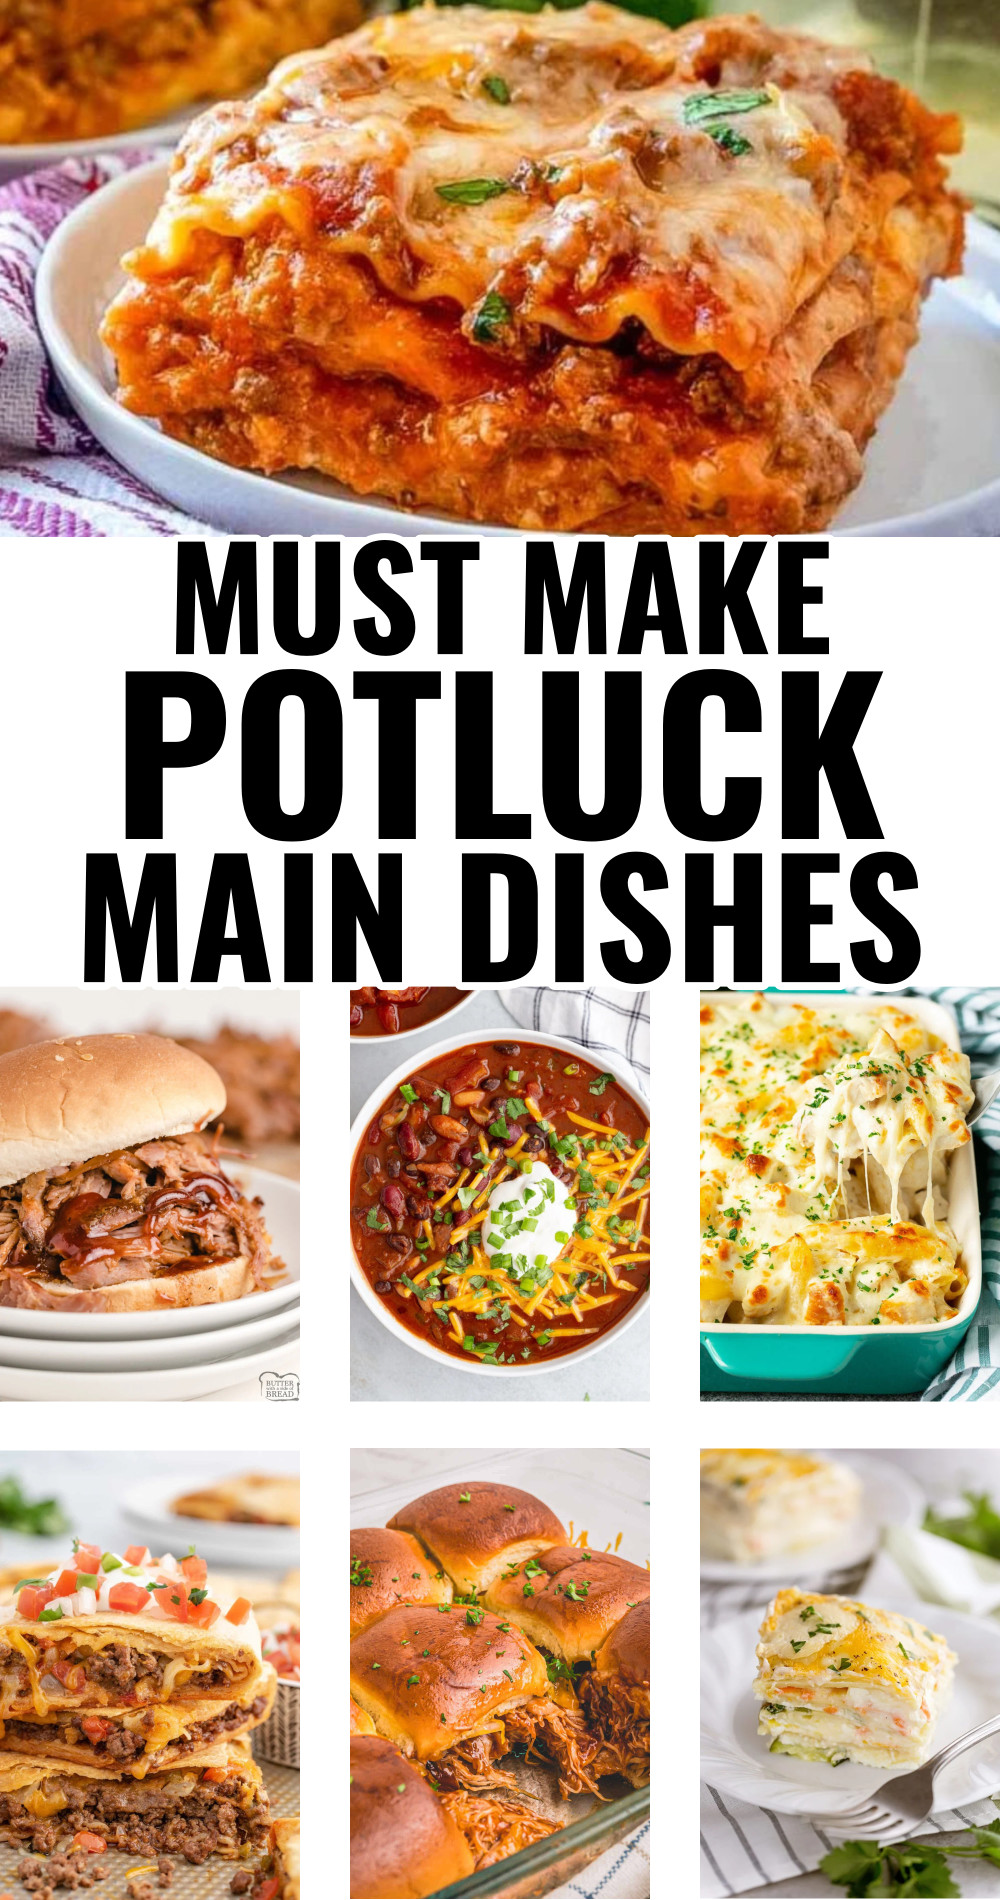 Potluck Main Dishes